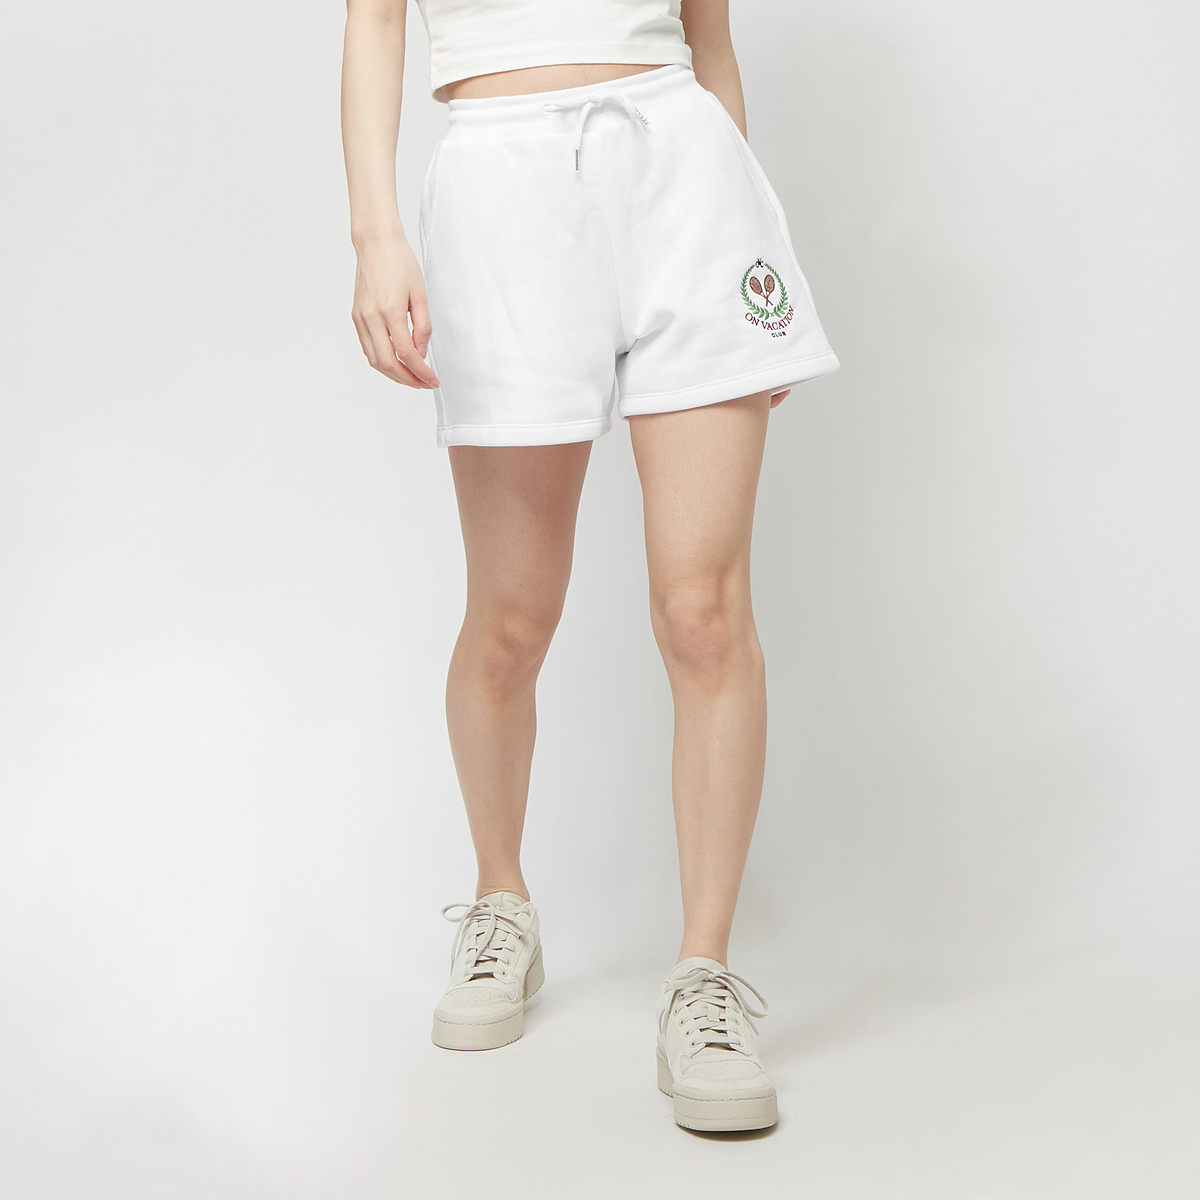 Tennis Emblem Shorts